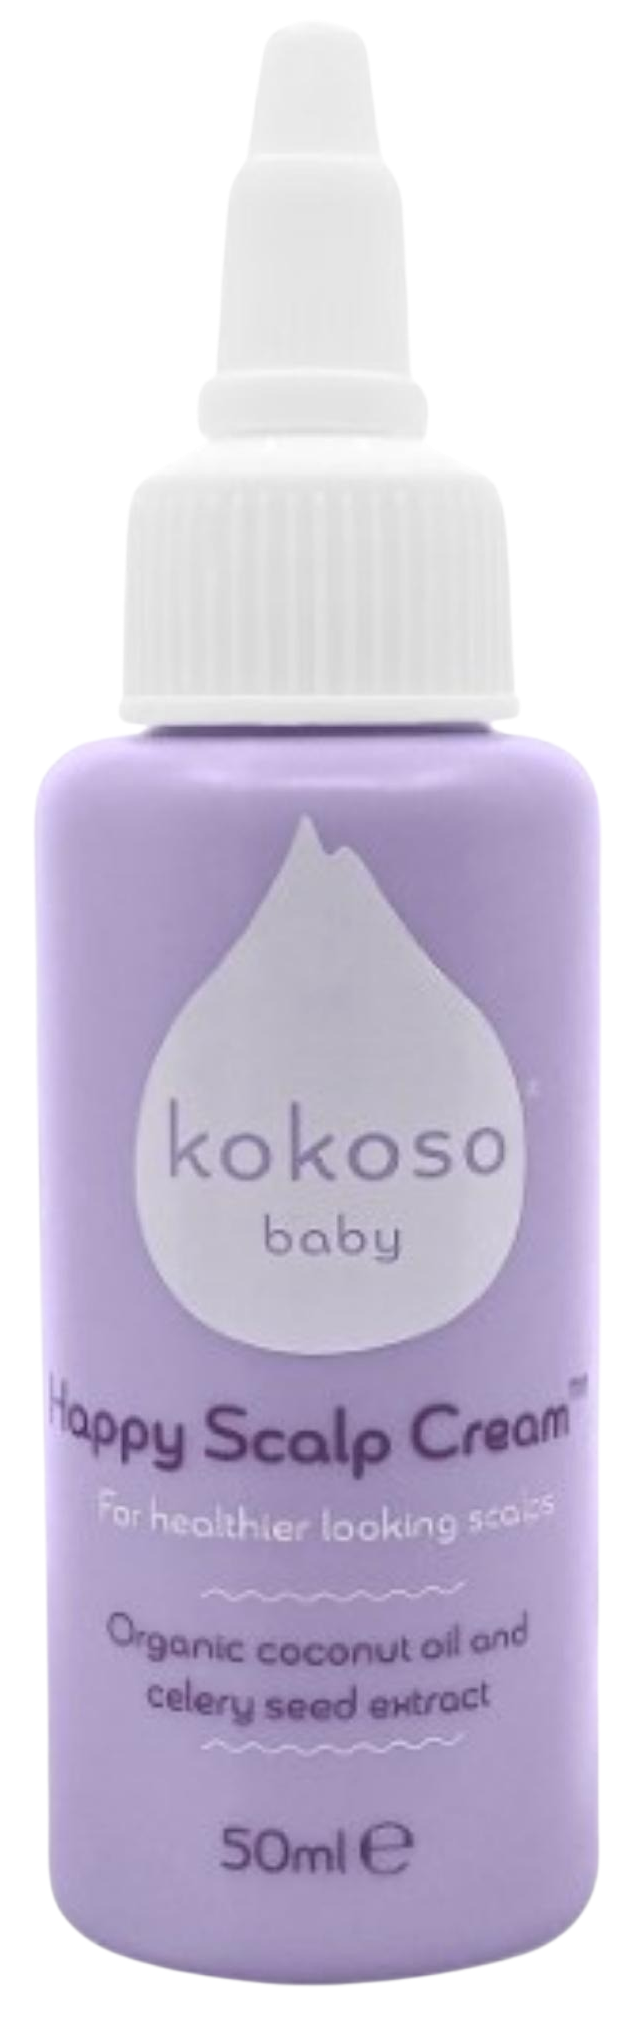 Kokoso Baby Happy Scalp Cream, 50 ml